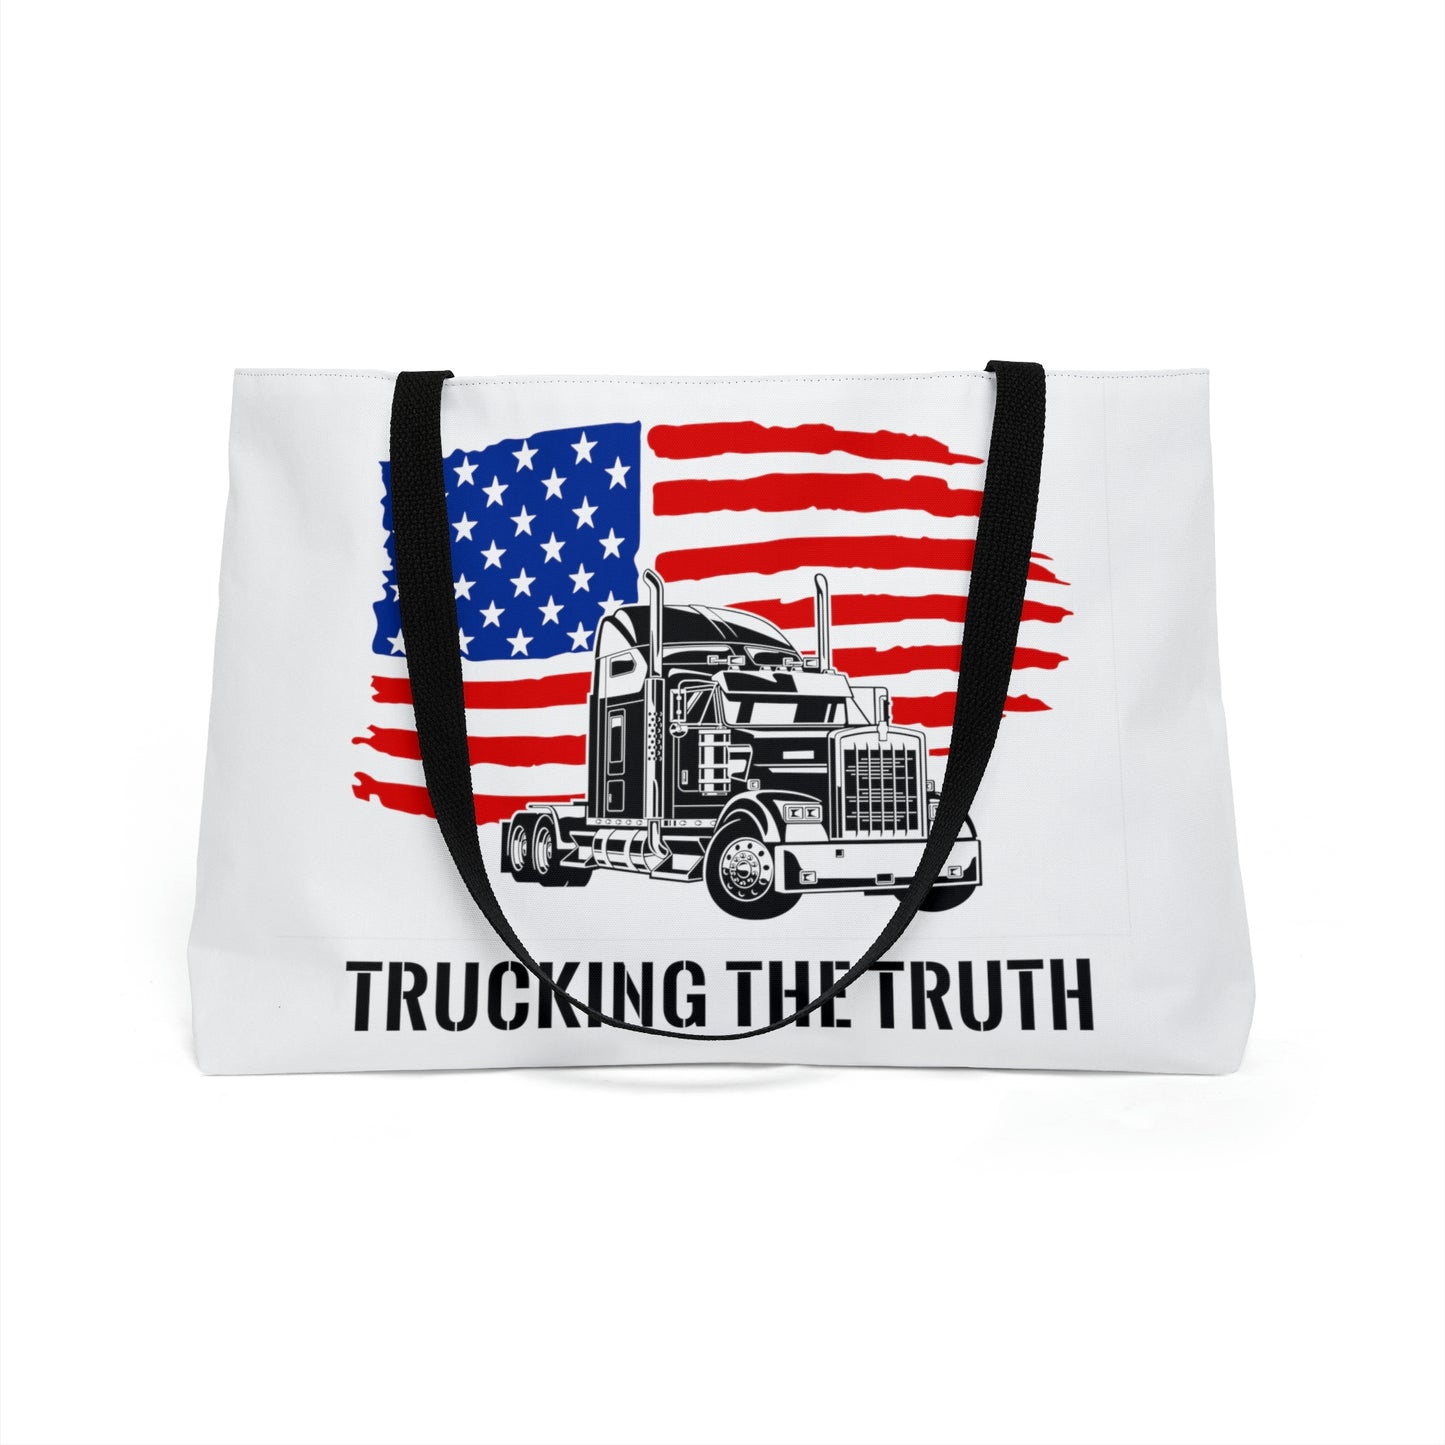 "Trucking the Truth" Weekender Tote Bag